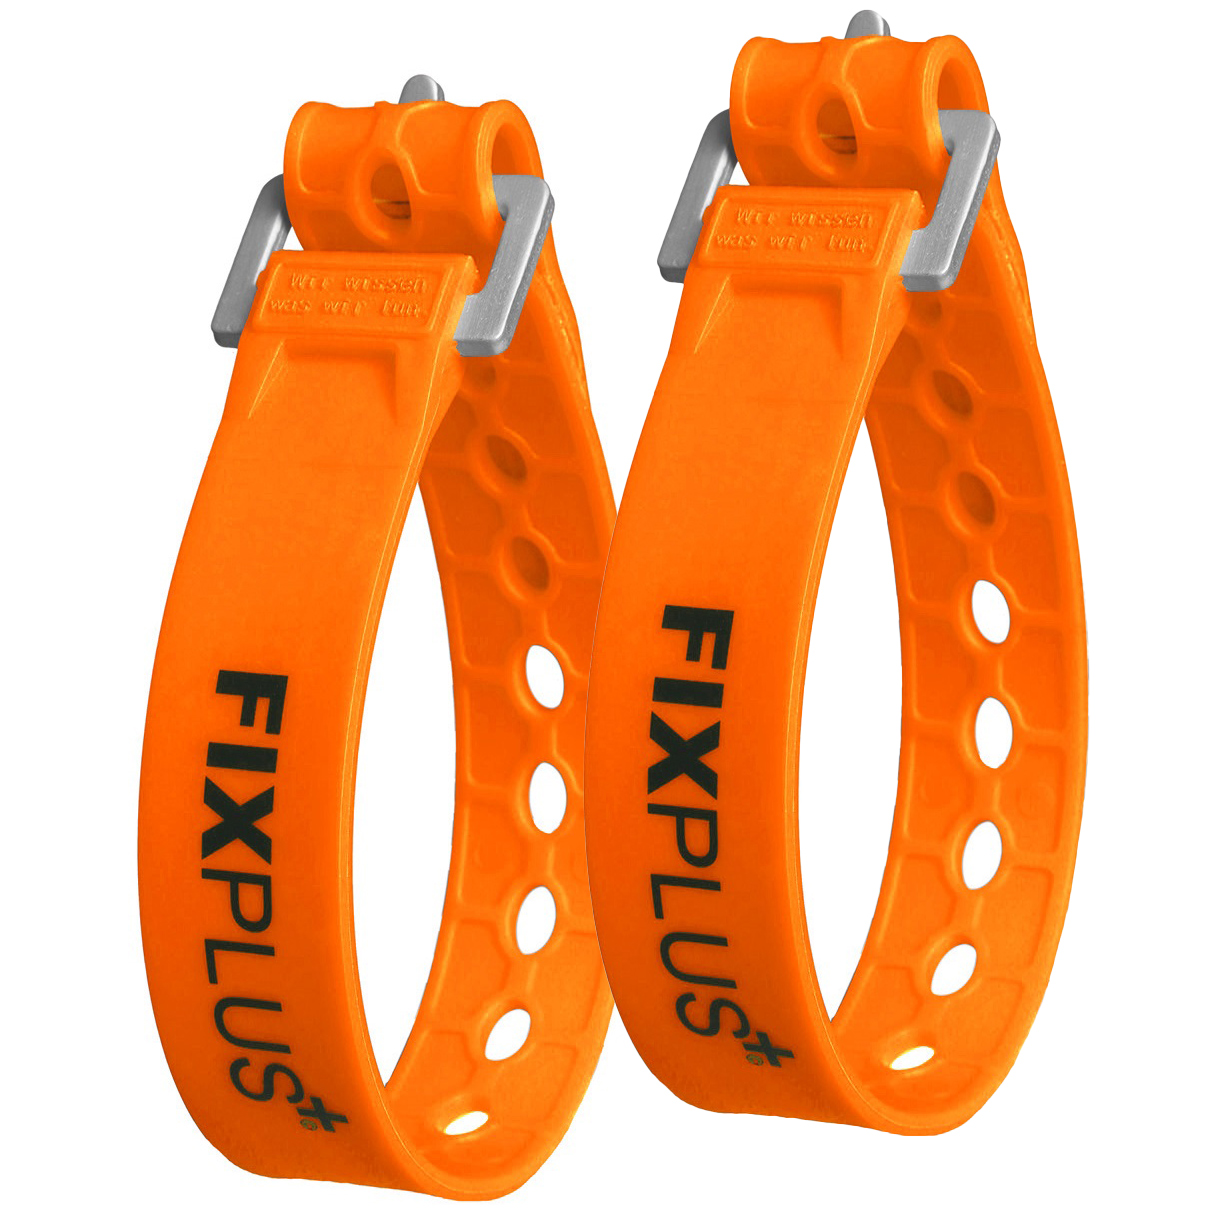 Bild von FixPlus Strap Gummizurrband 23cm - 2 Stck - orange